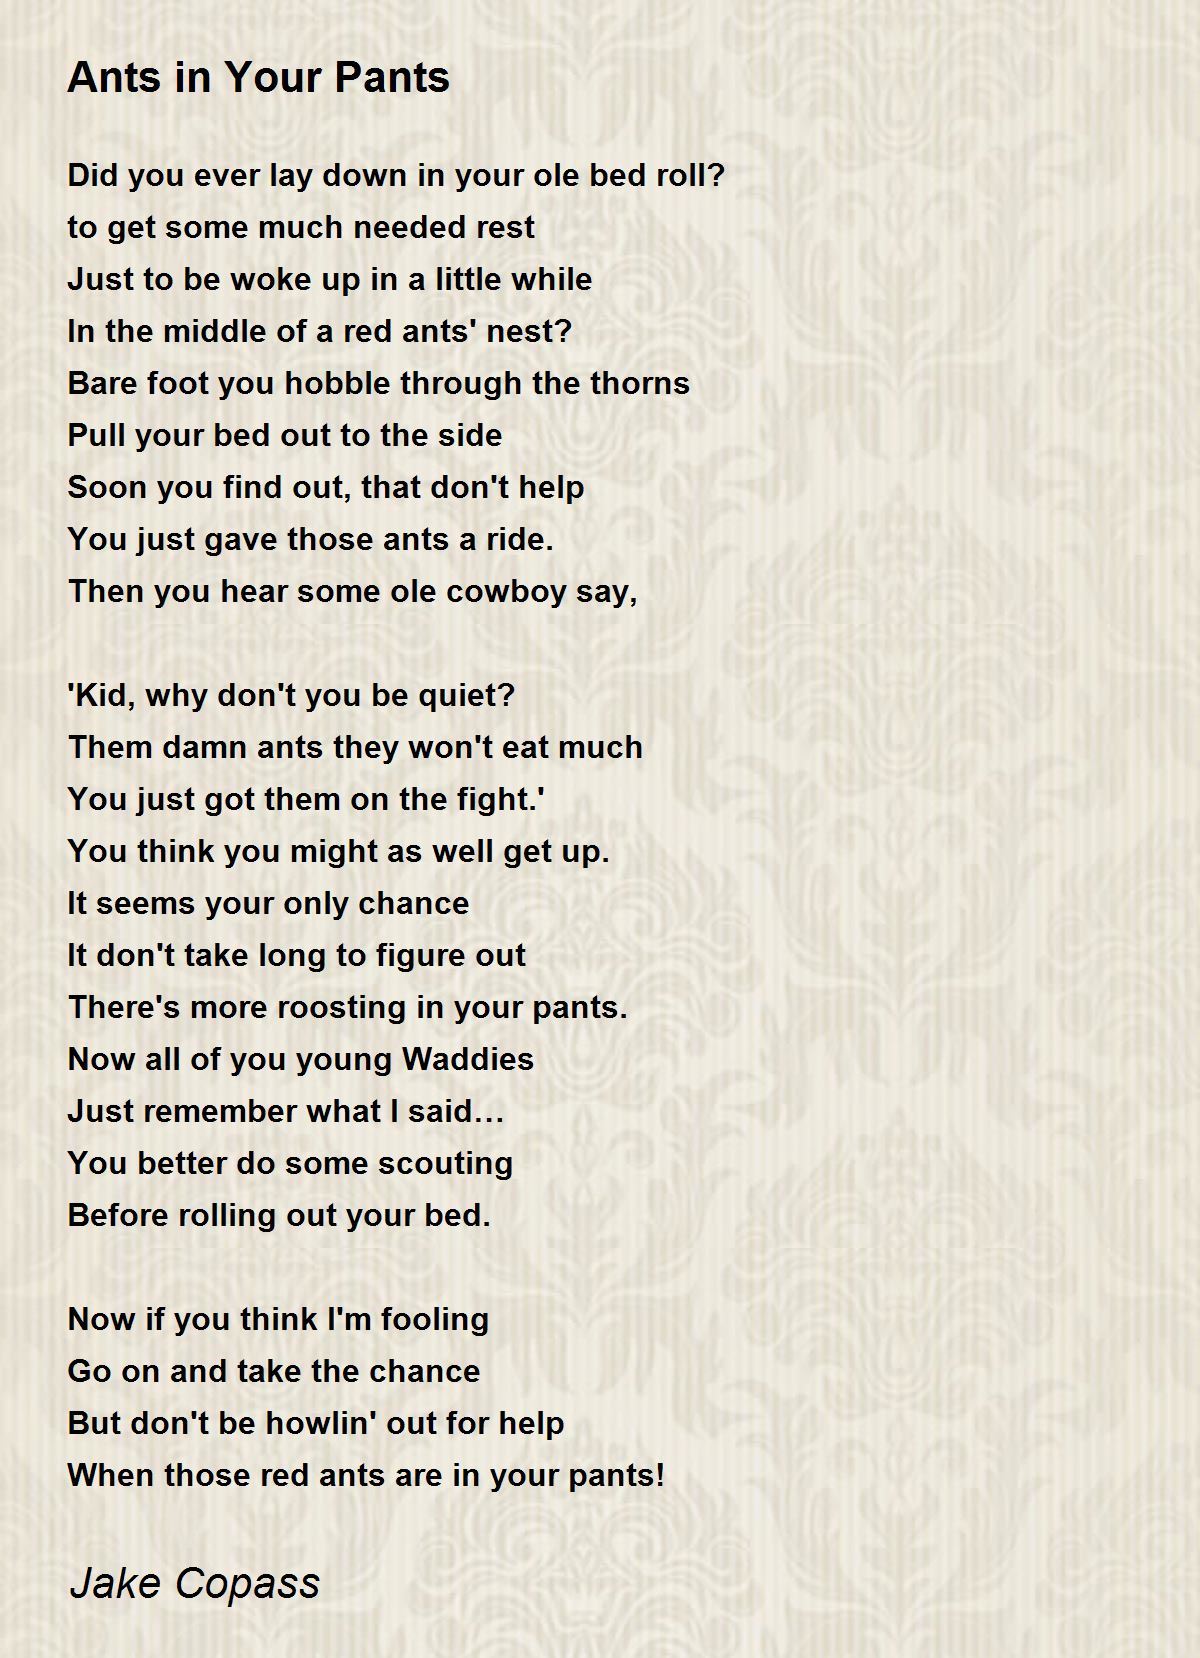 Ants in Your Pants - Ants in Your Pants Poem by Jake Copass